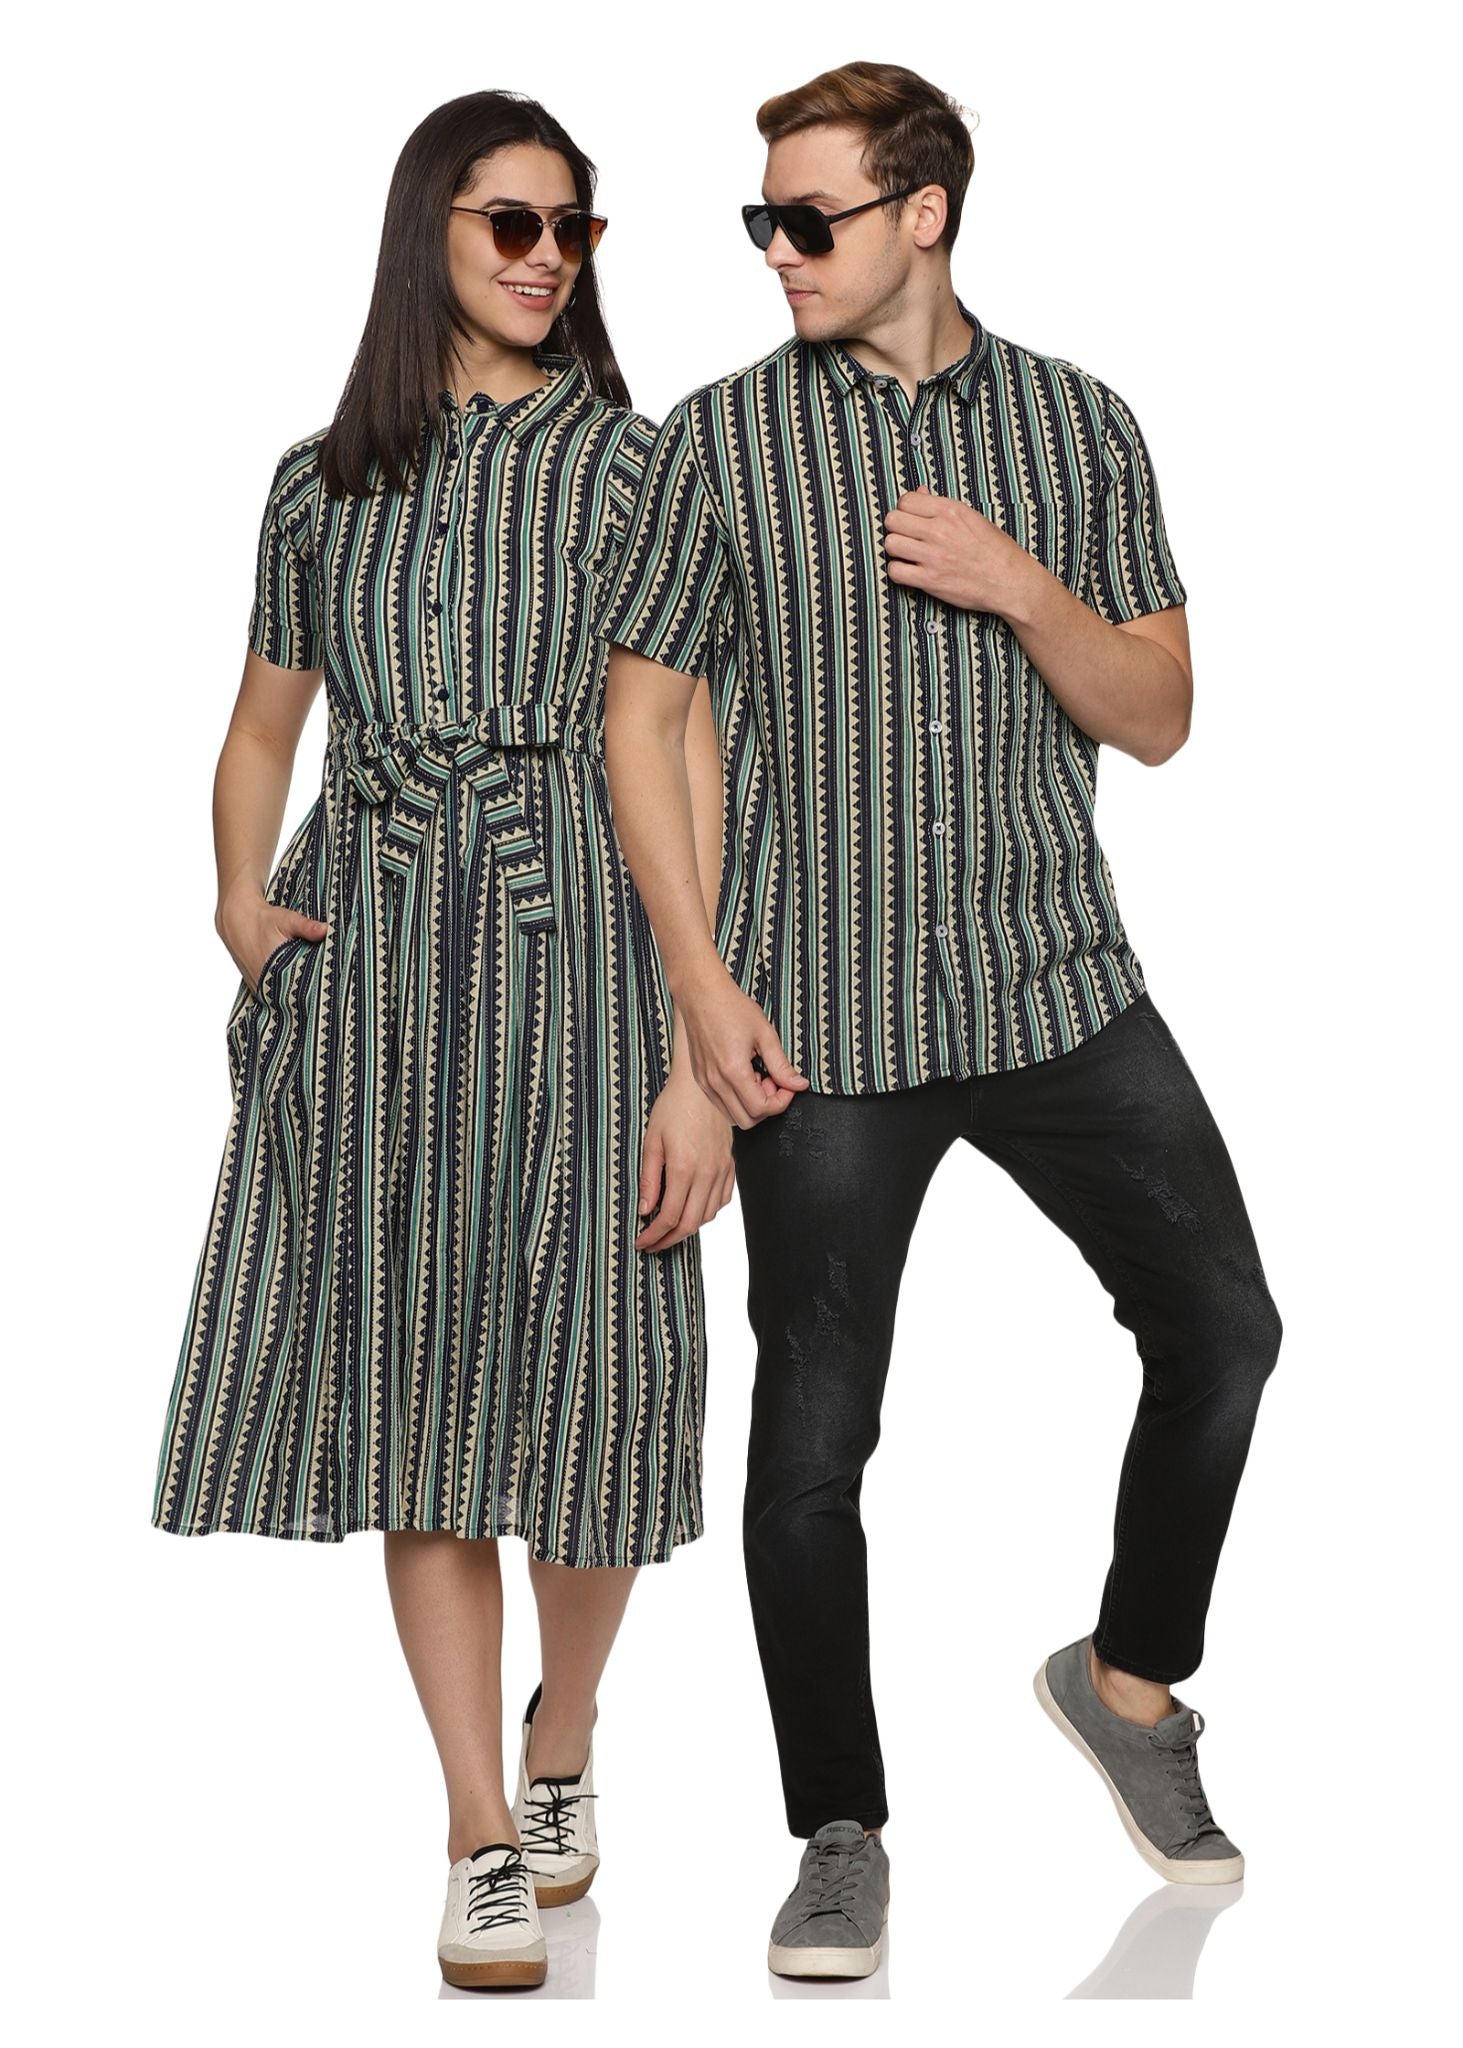 Hamilton Katha Couple Matching Shirt and Dress - Tusok